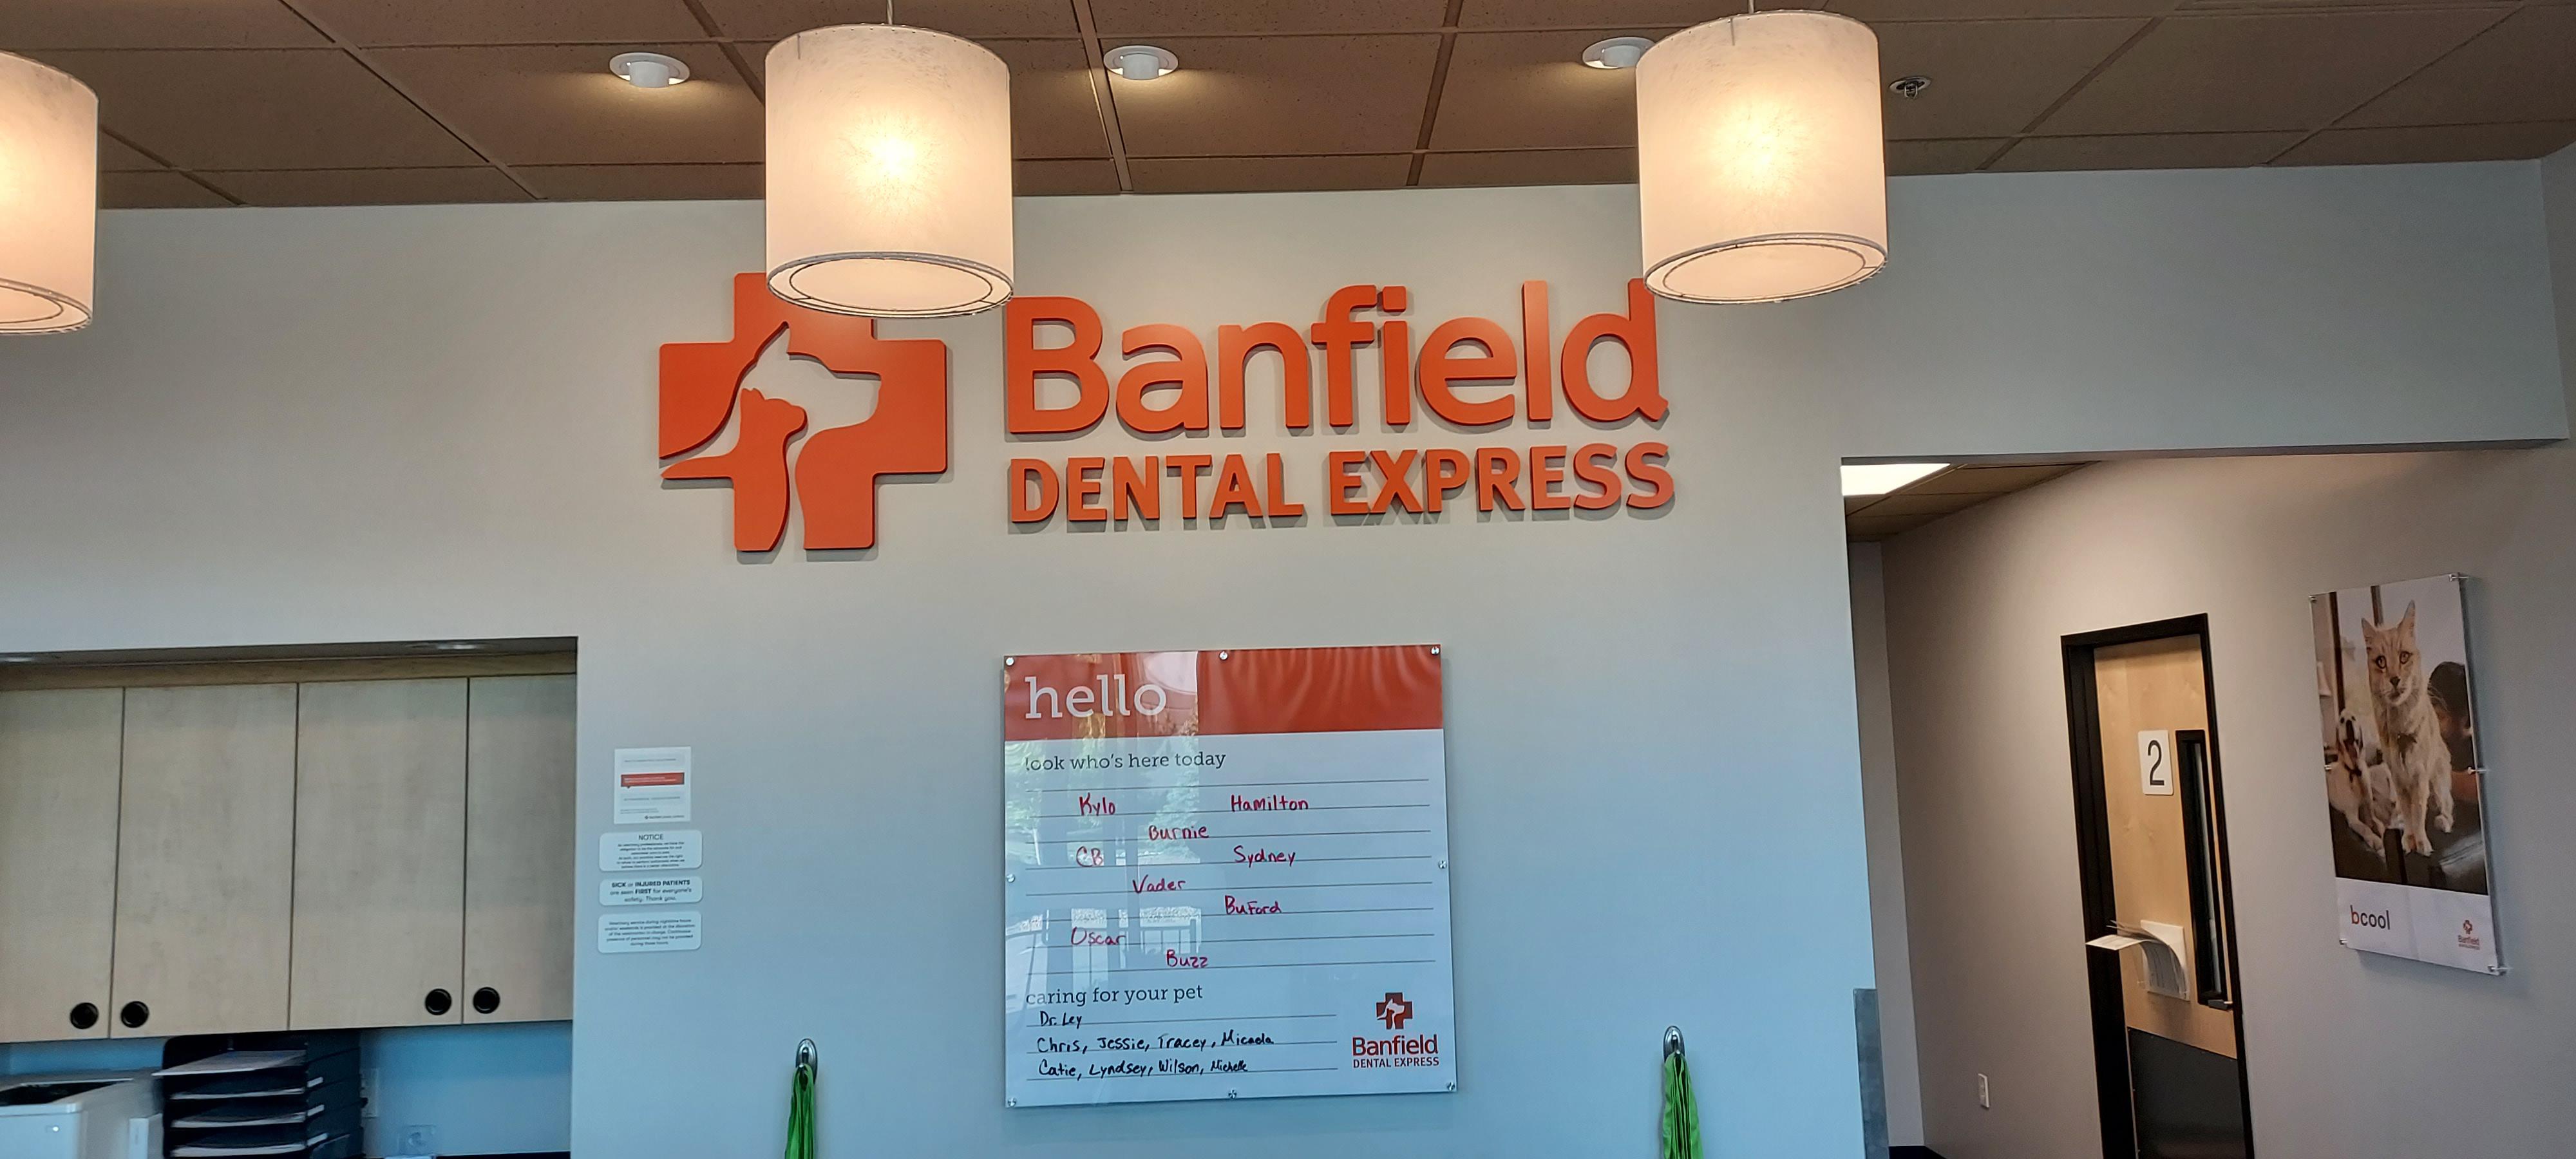 Banfield Dental Express interior